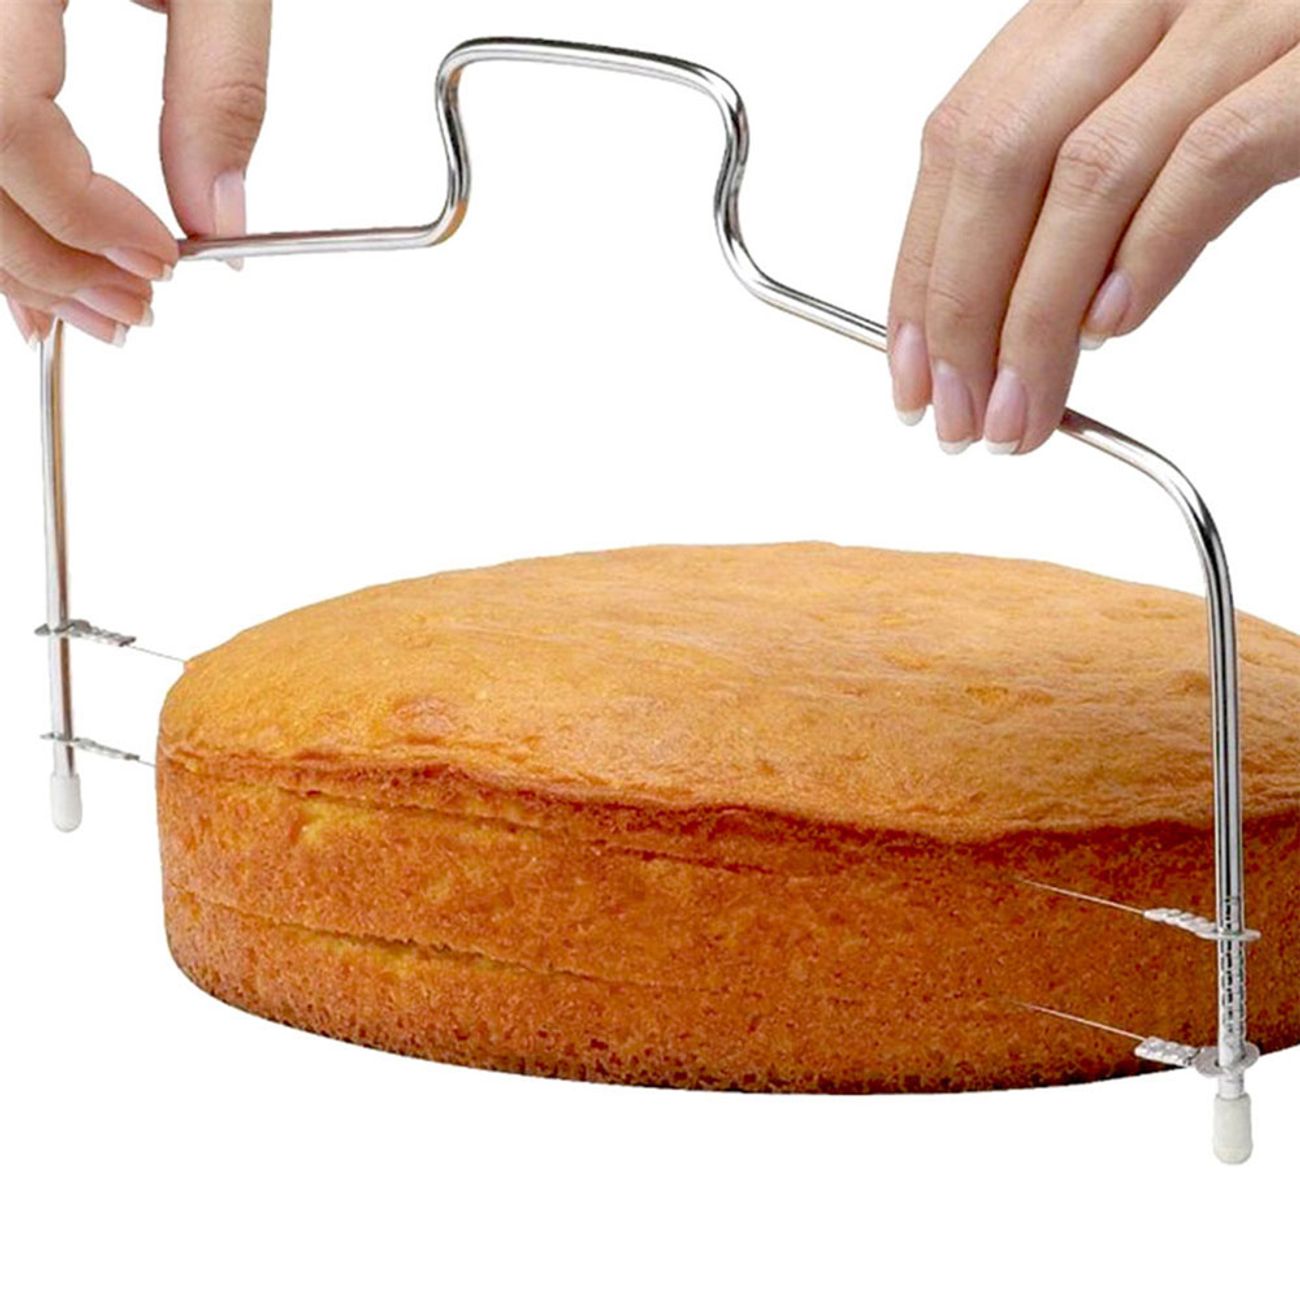 cake-cut-slicer-82239-2